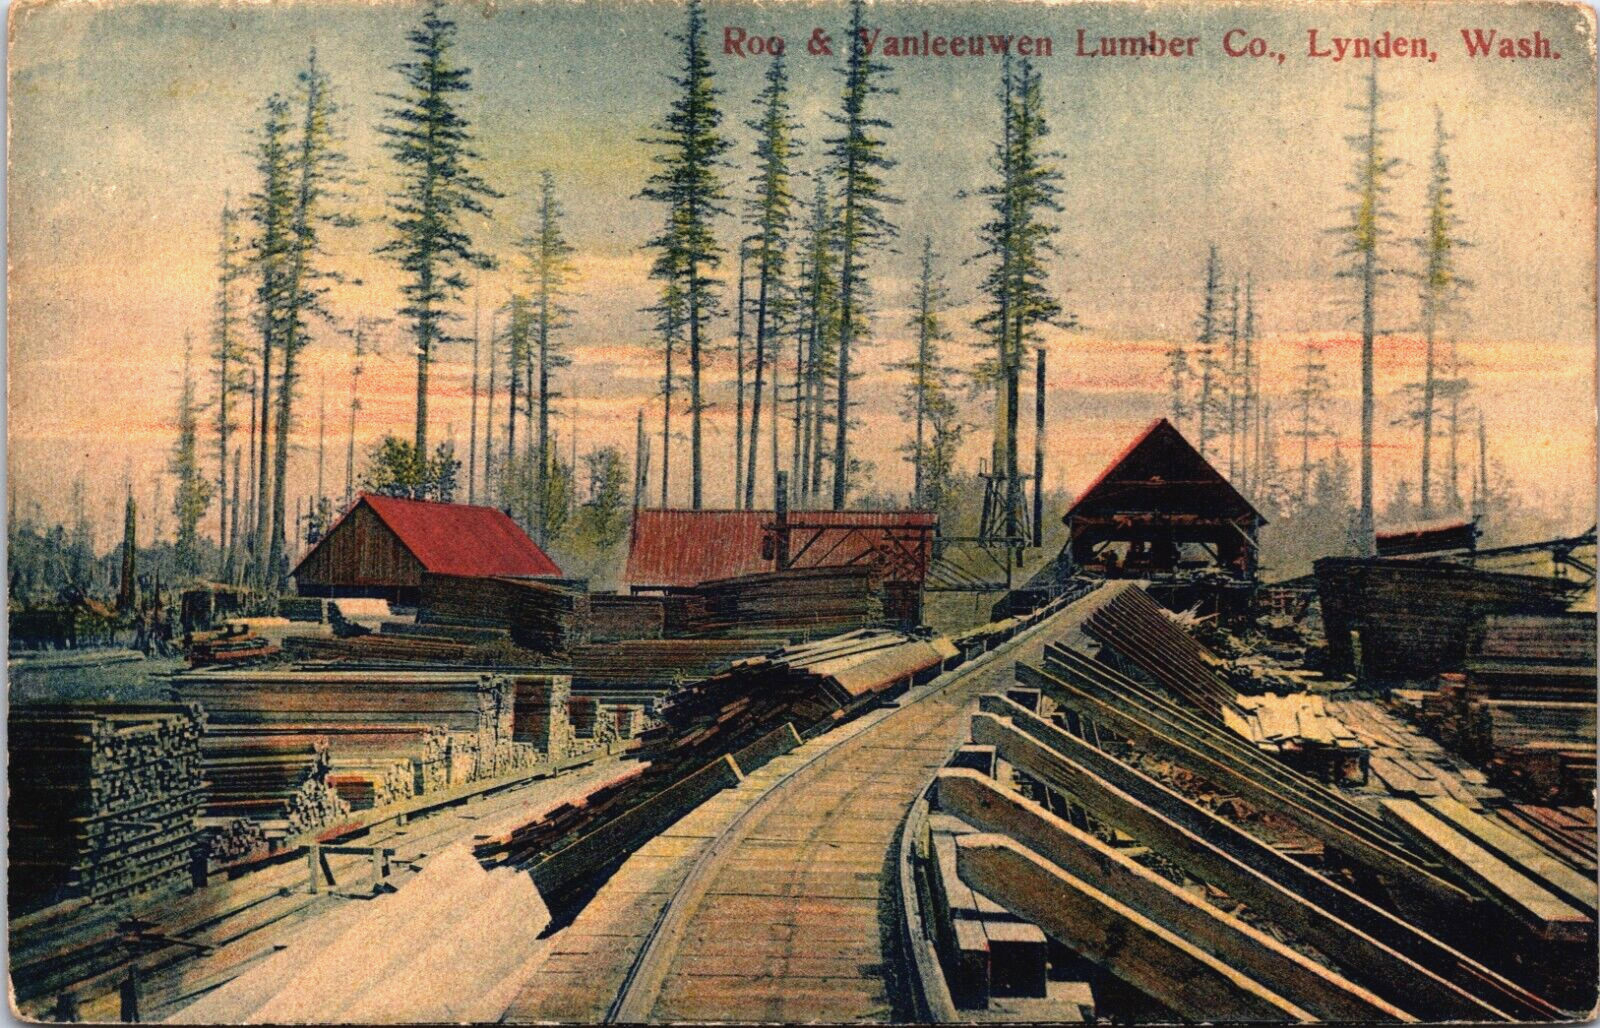 Roo & Van Leeuwen Lumber Co. Lynden Washington Vintage Postcard B173